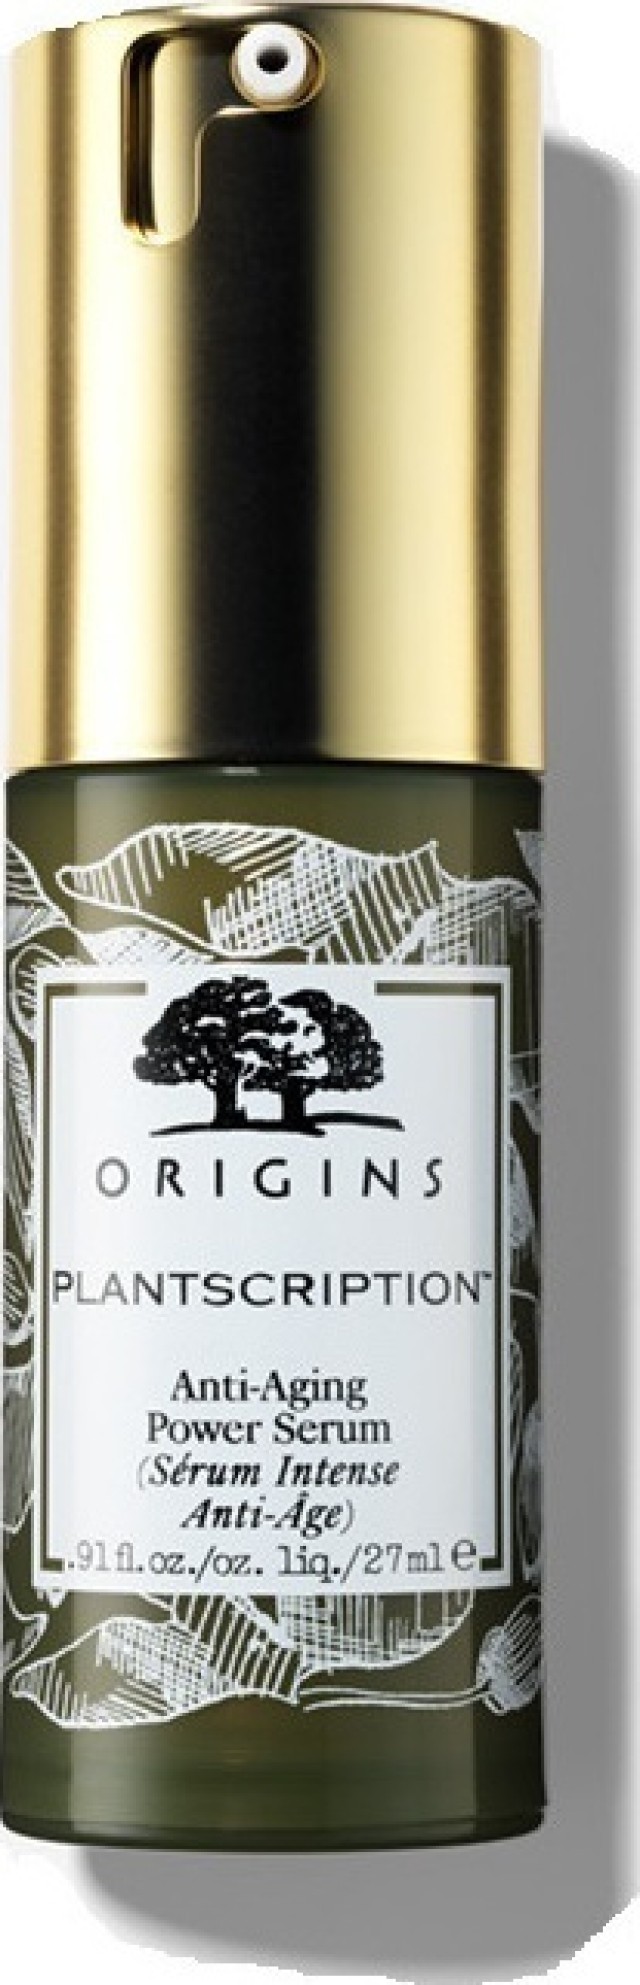 Origins - Plantscription Power Serum 27ml